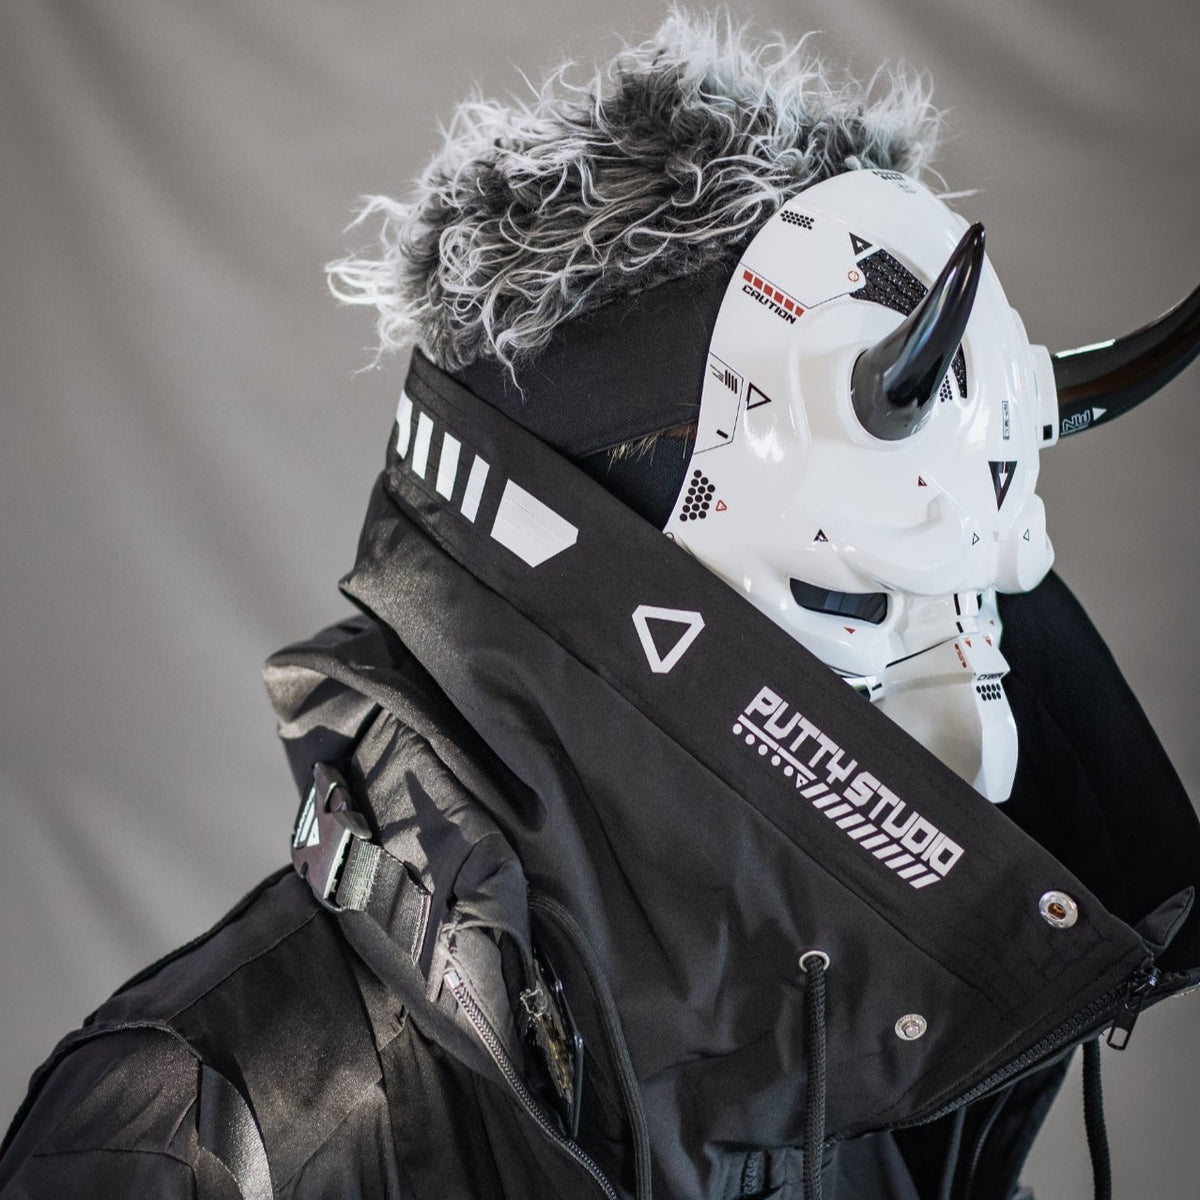 Masque Cyberpunk LED Oni